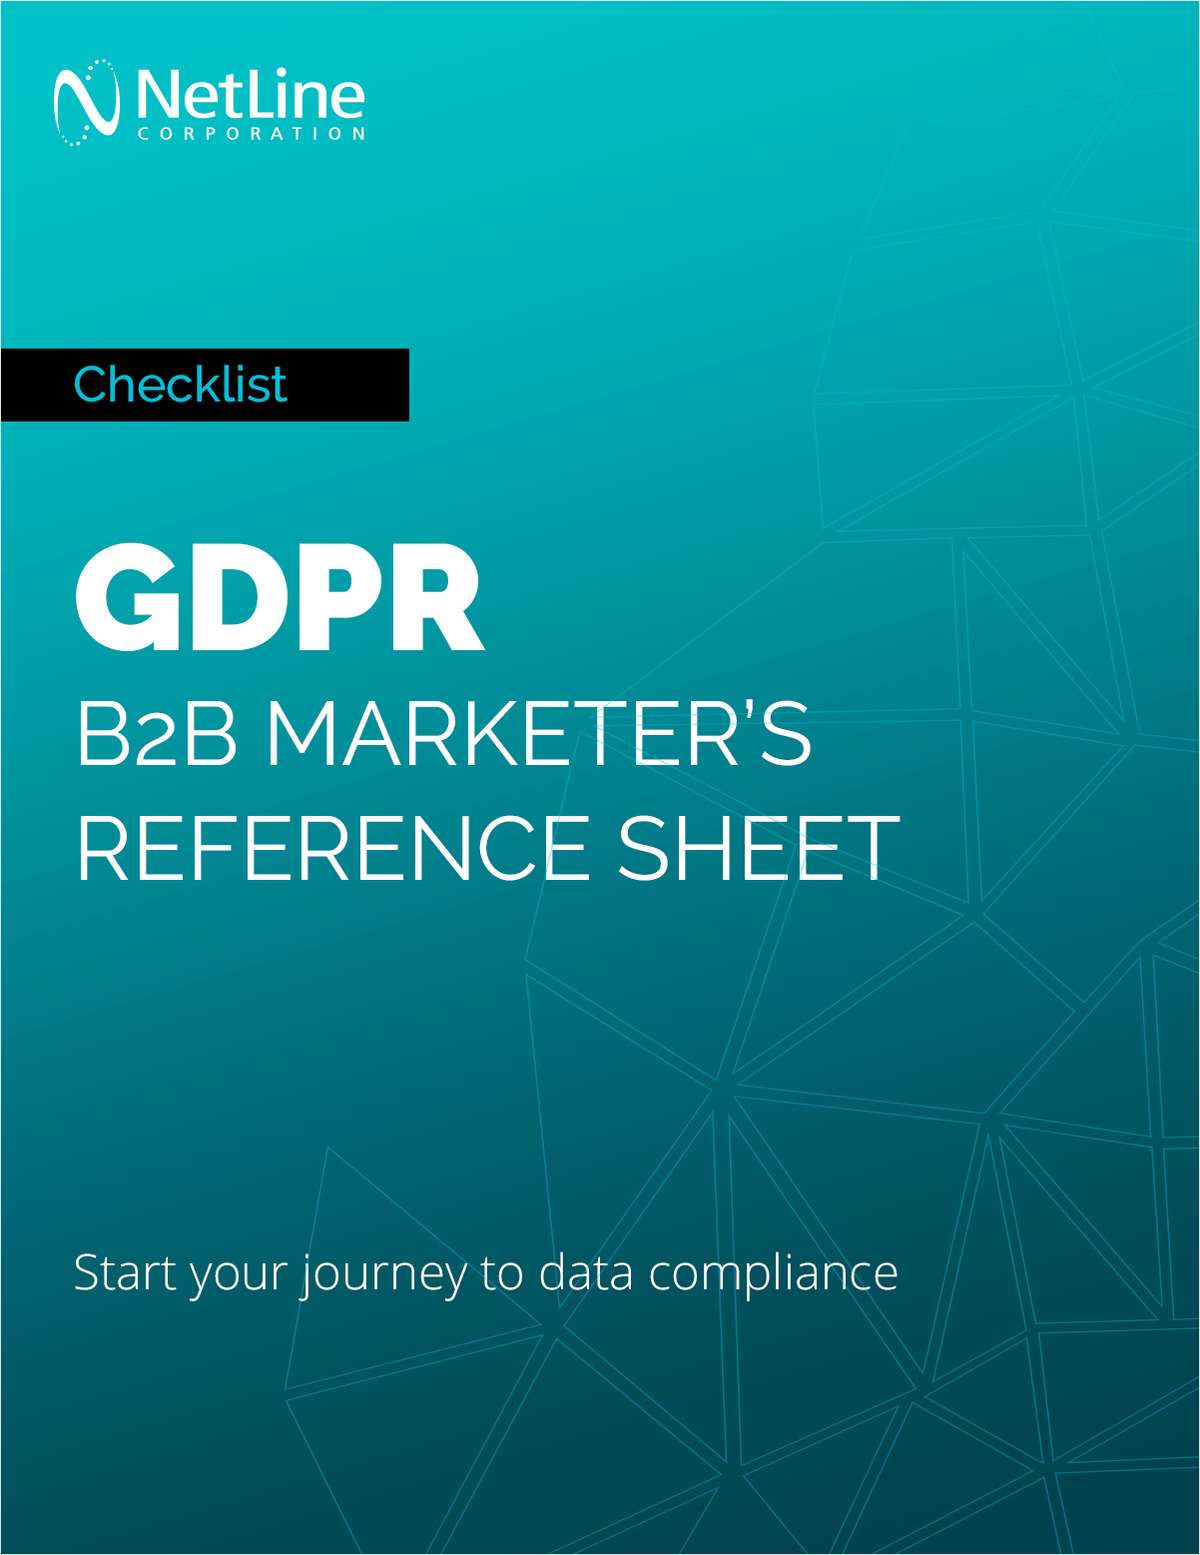 GDPR: B2B Marketer's Reference Sheet